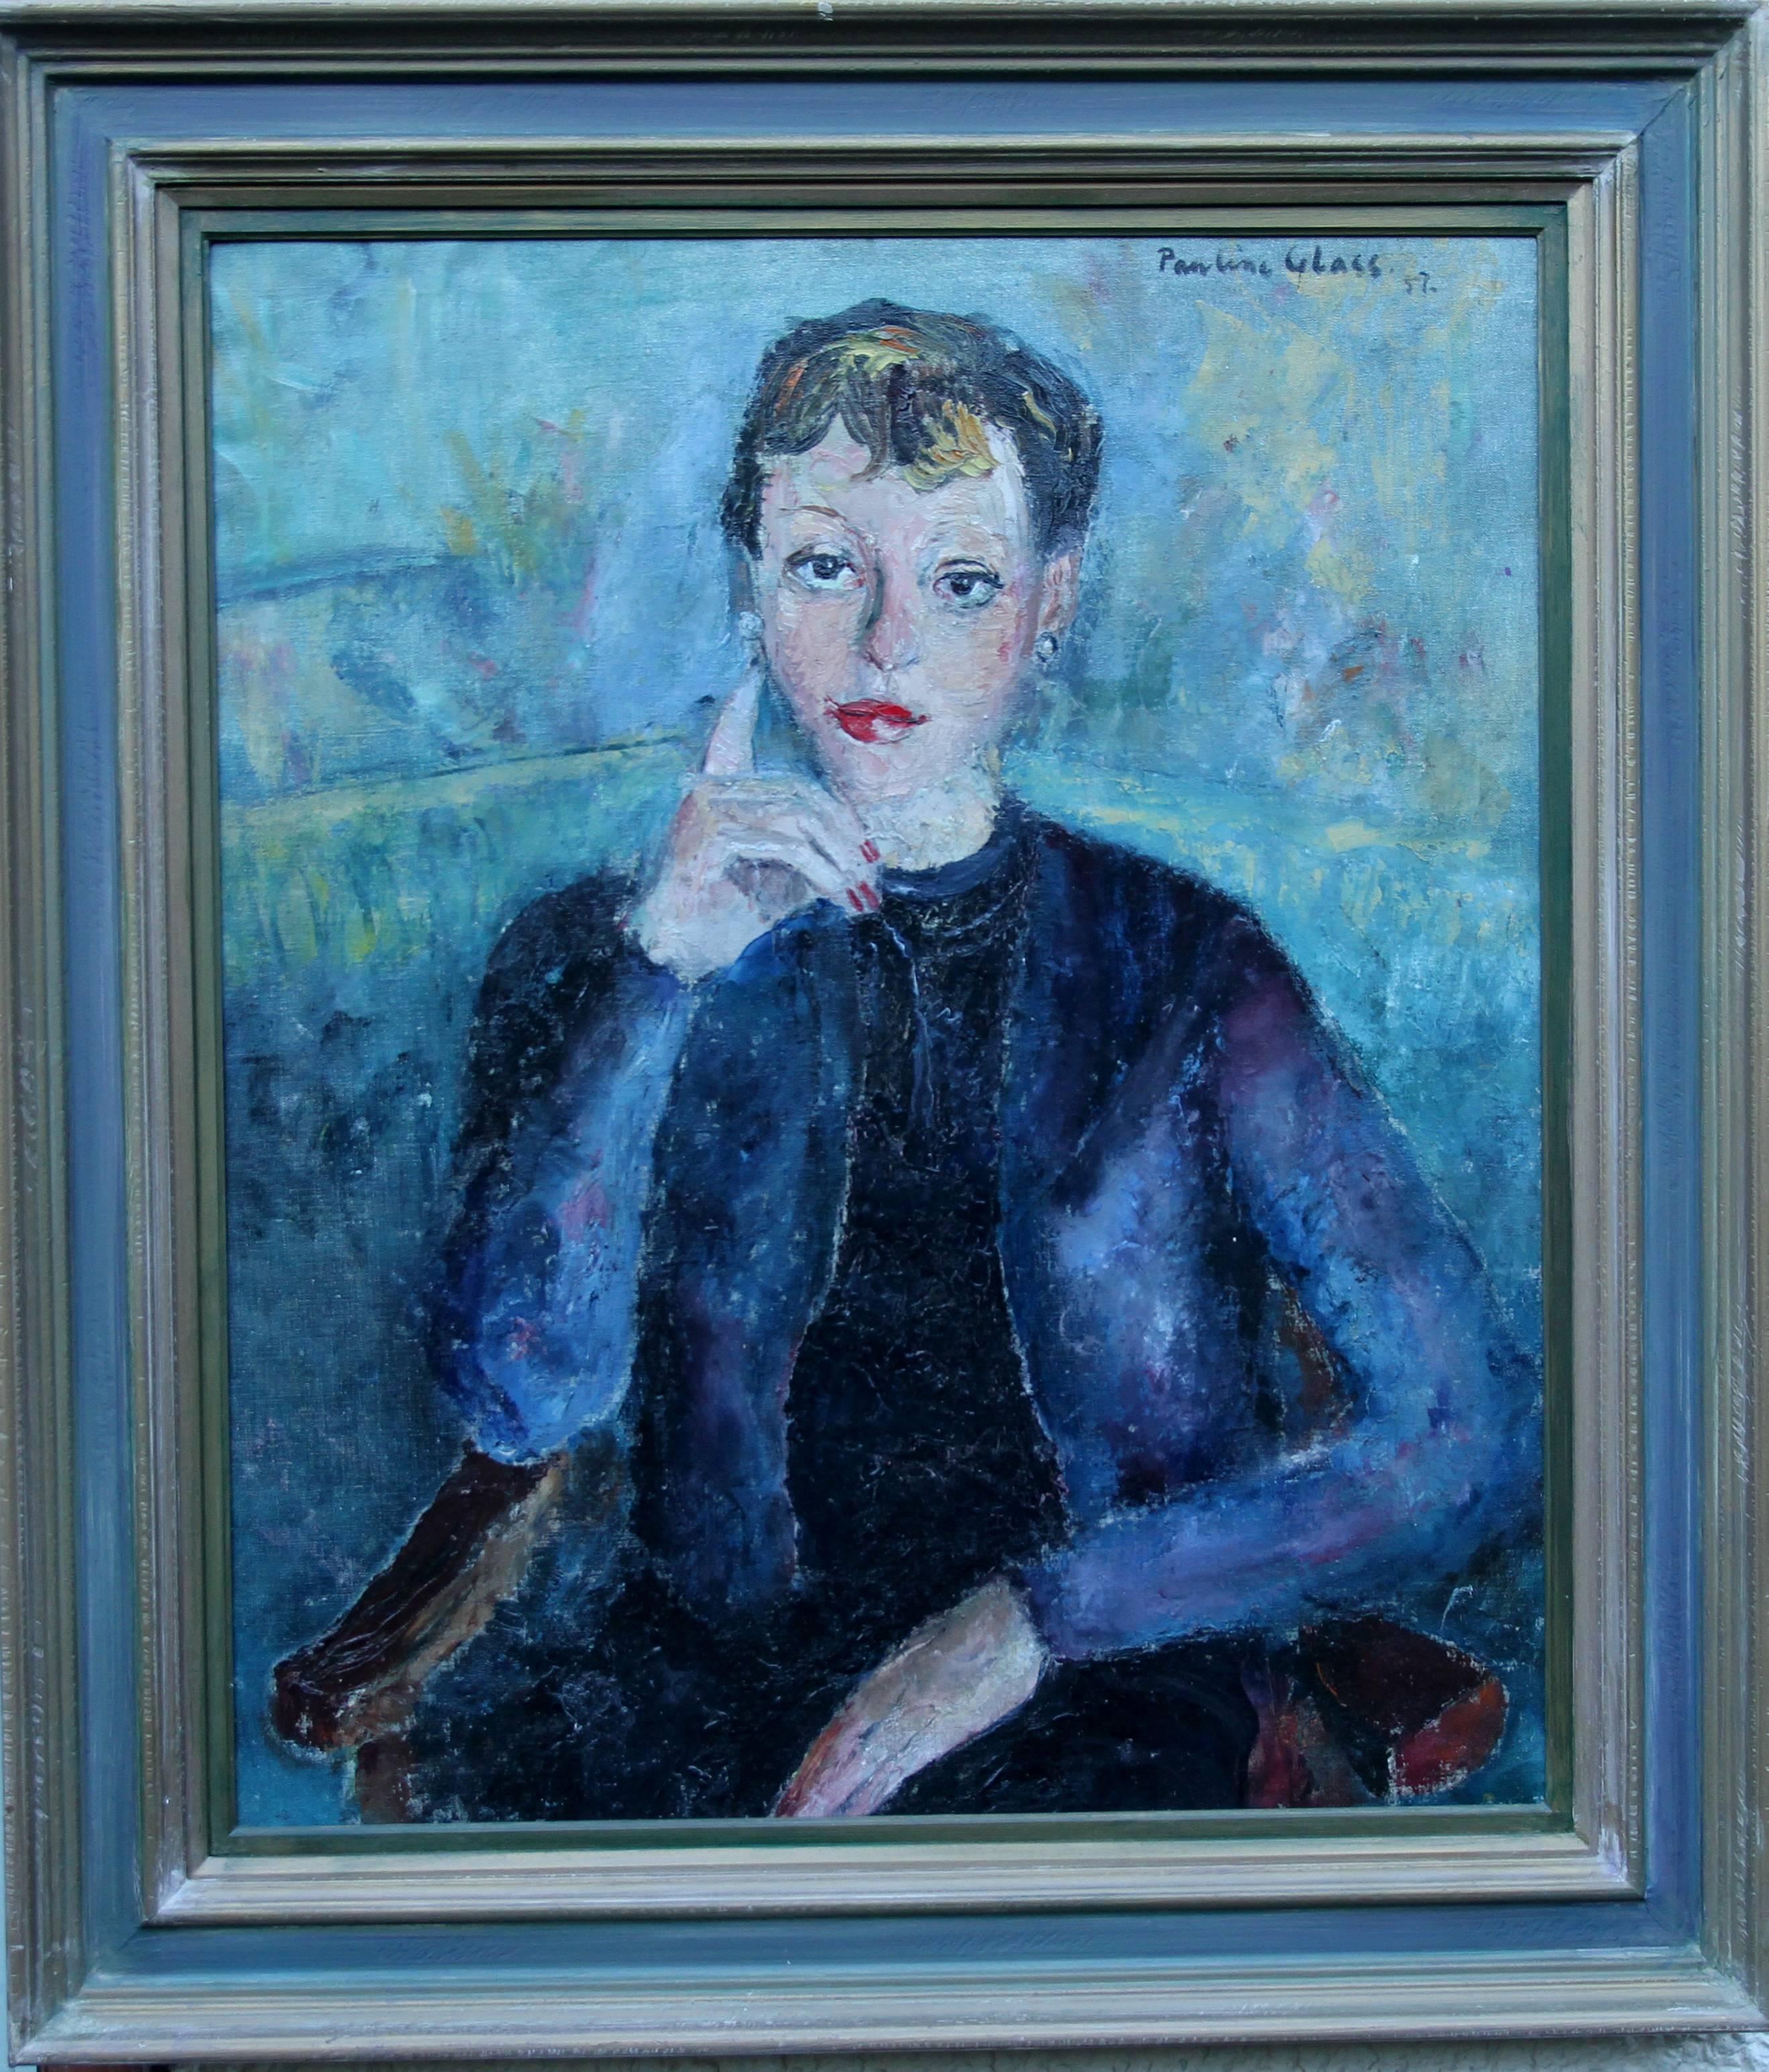 Pauline Glass Portrait Painting - Lady in Blue - British 50's Impressionist oil painting portrait female artist 